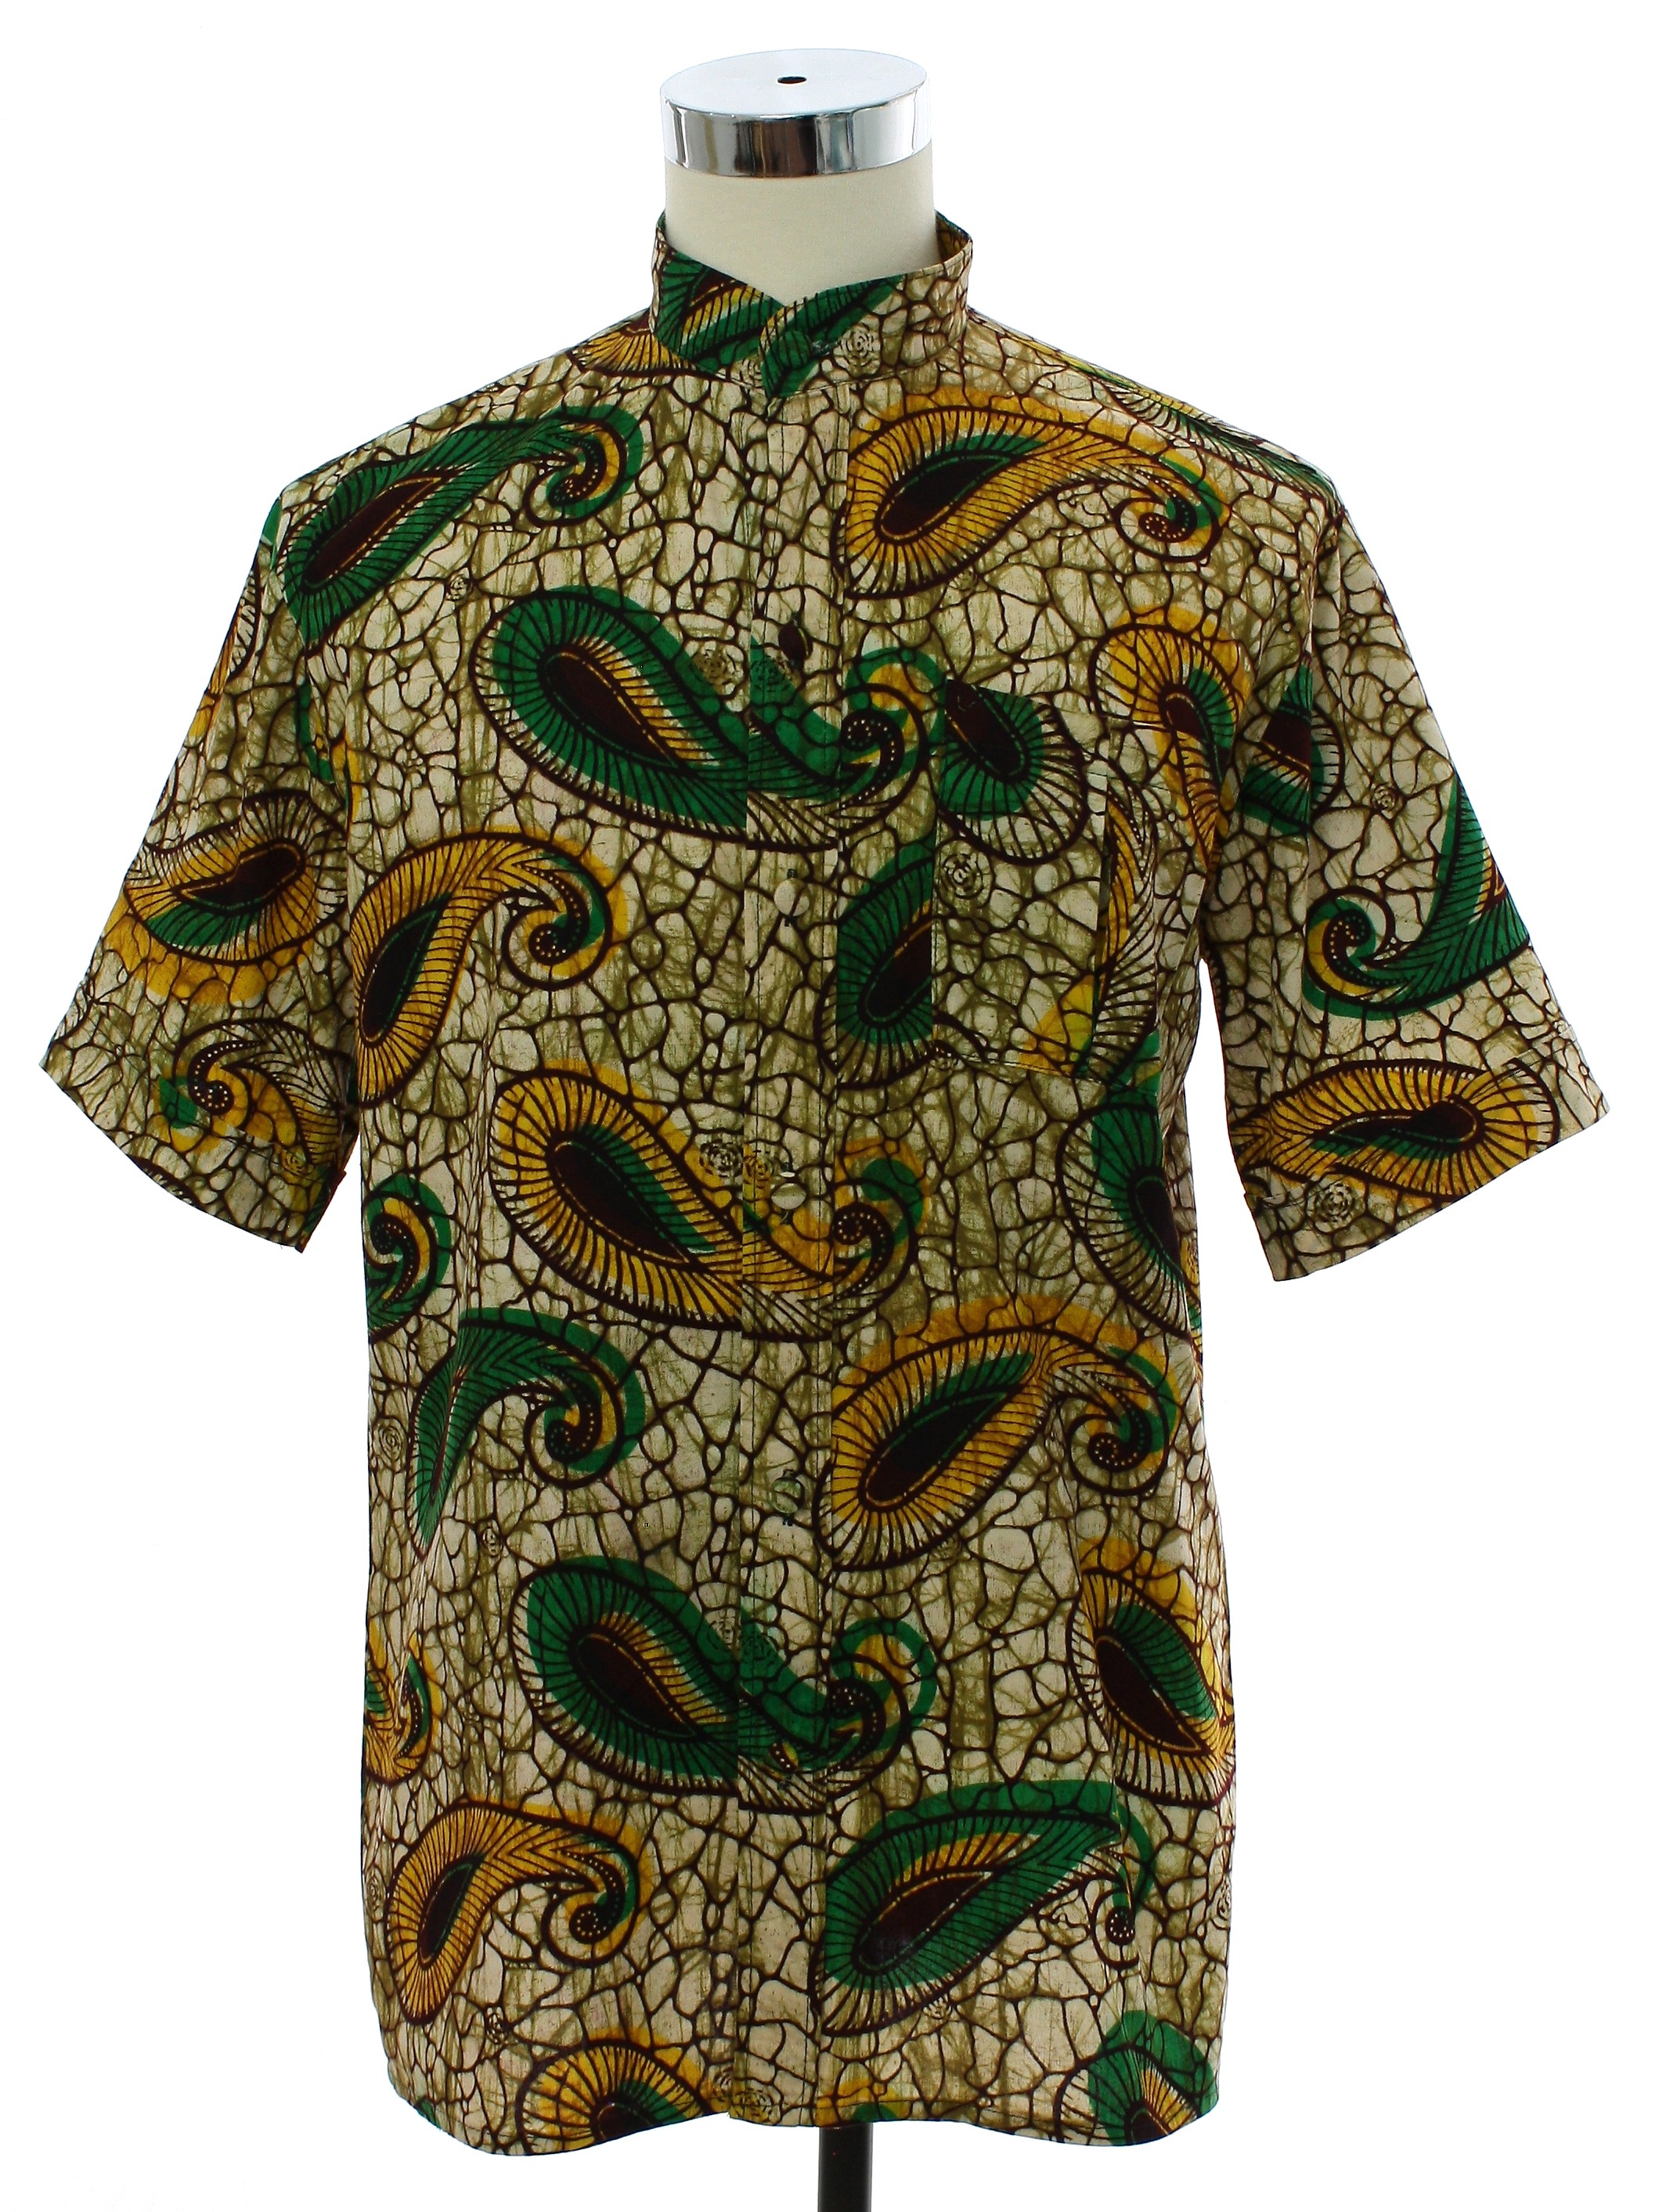 Eighties Vintage Shirt: 80s -Tribal Exchange Stores Nigeria- Mens ecru ...